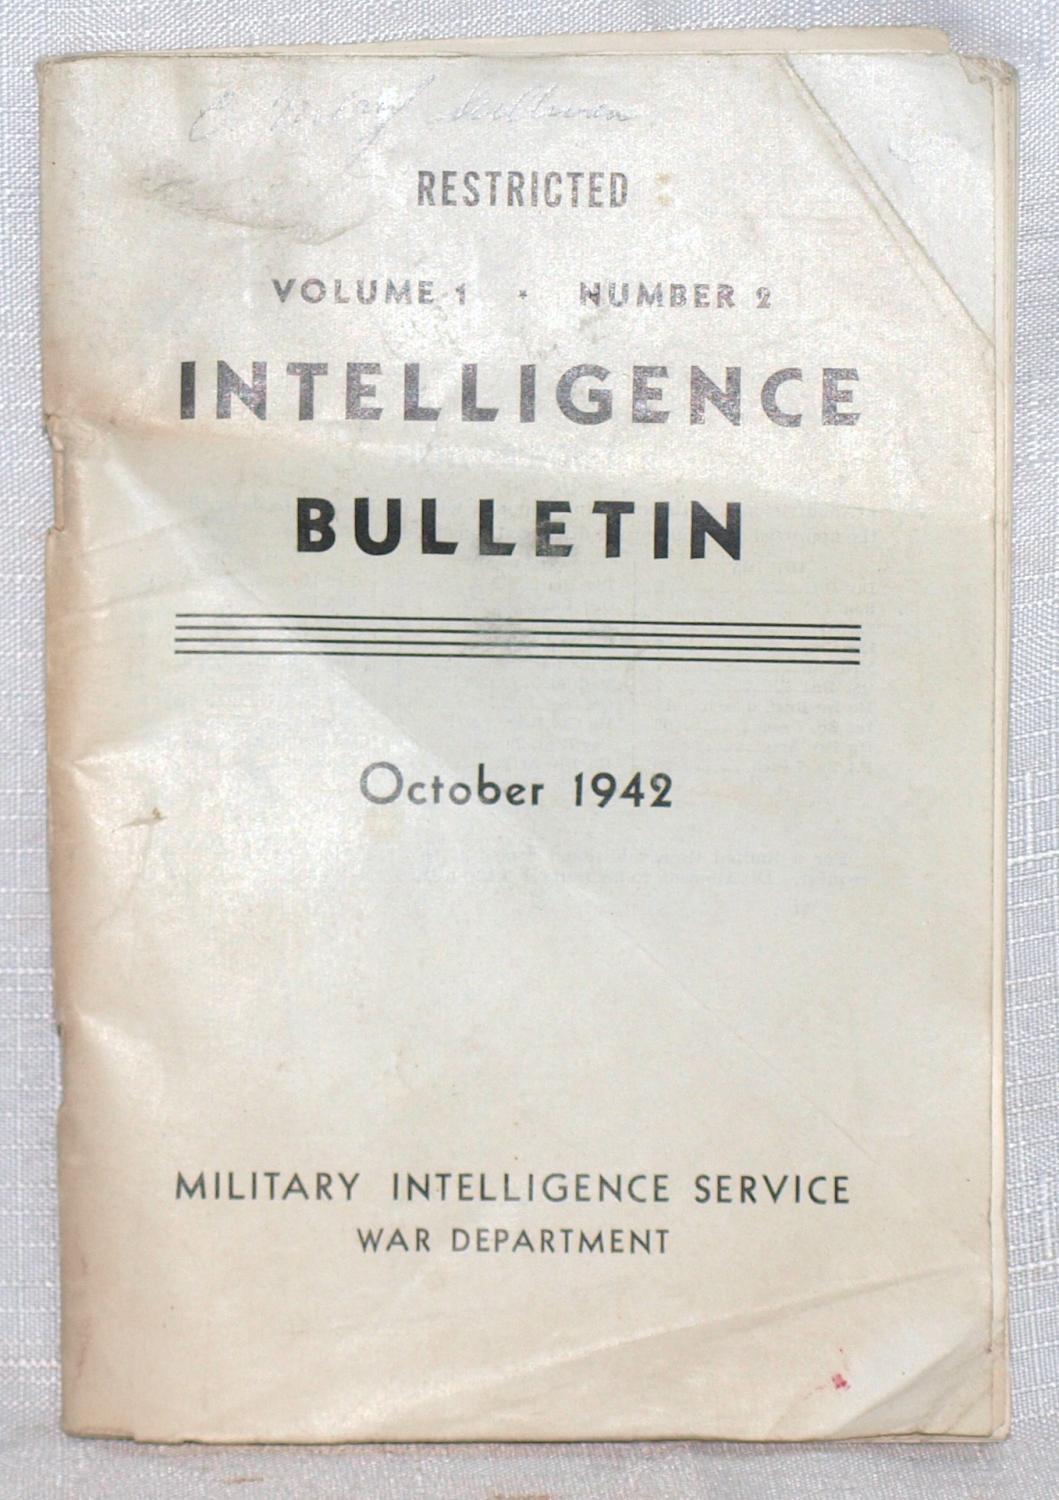 Intelligence bulletin (Vol. 1) (Number 2) October 1942. Restricted by